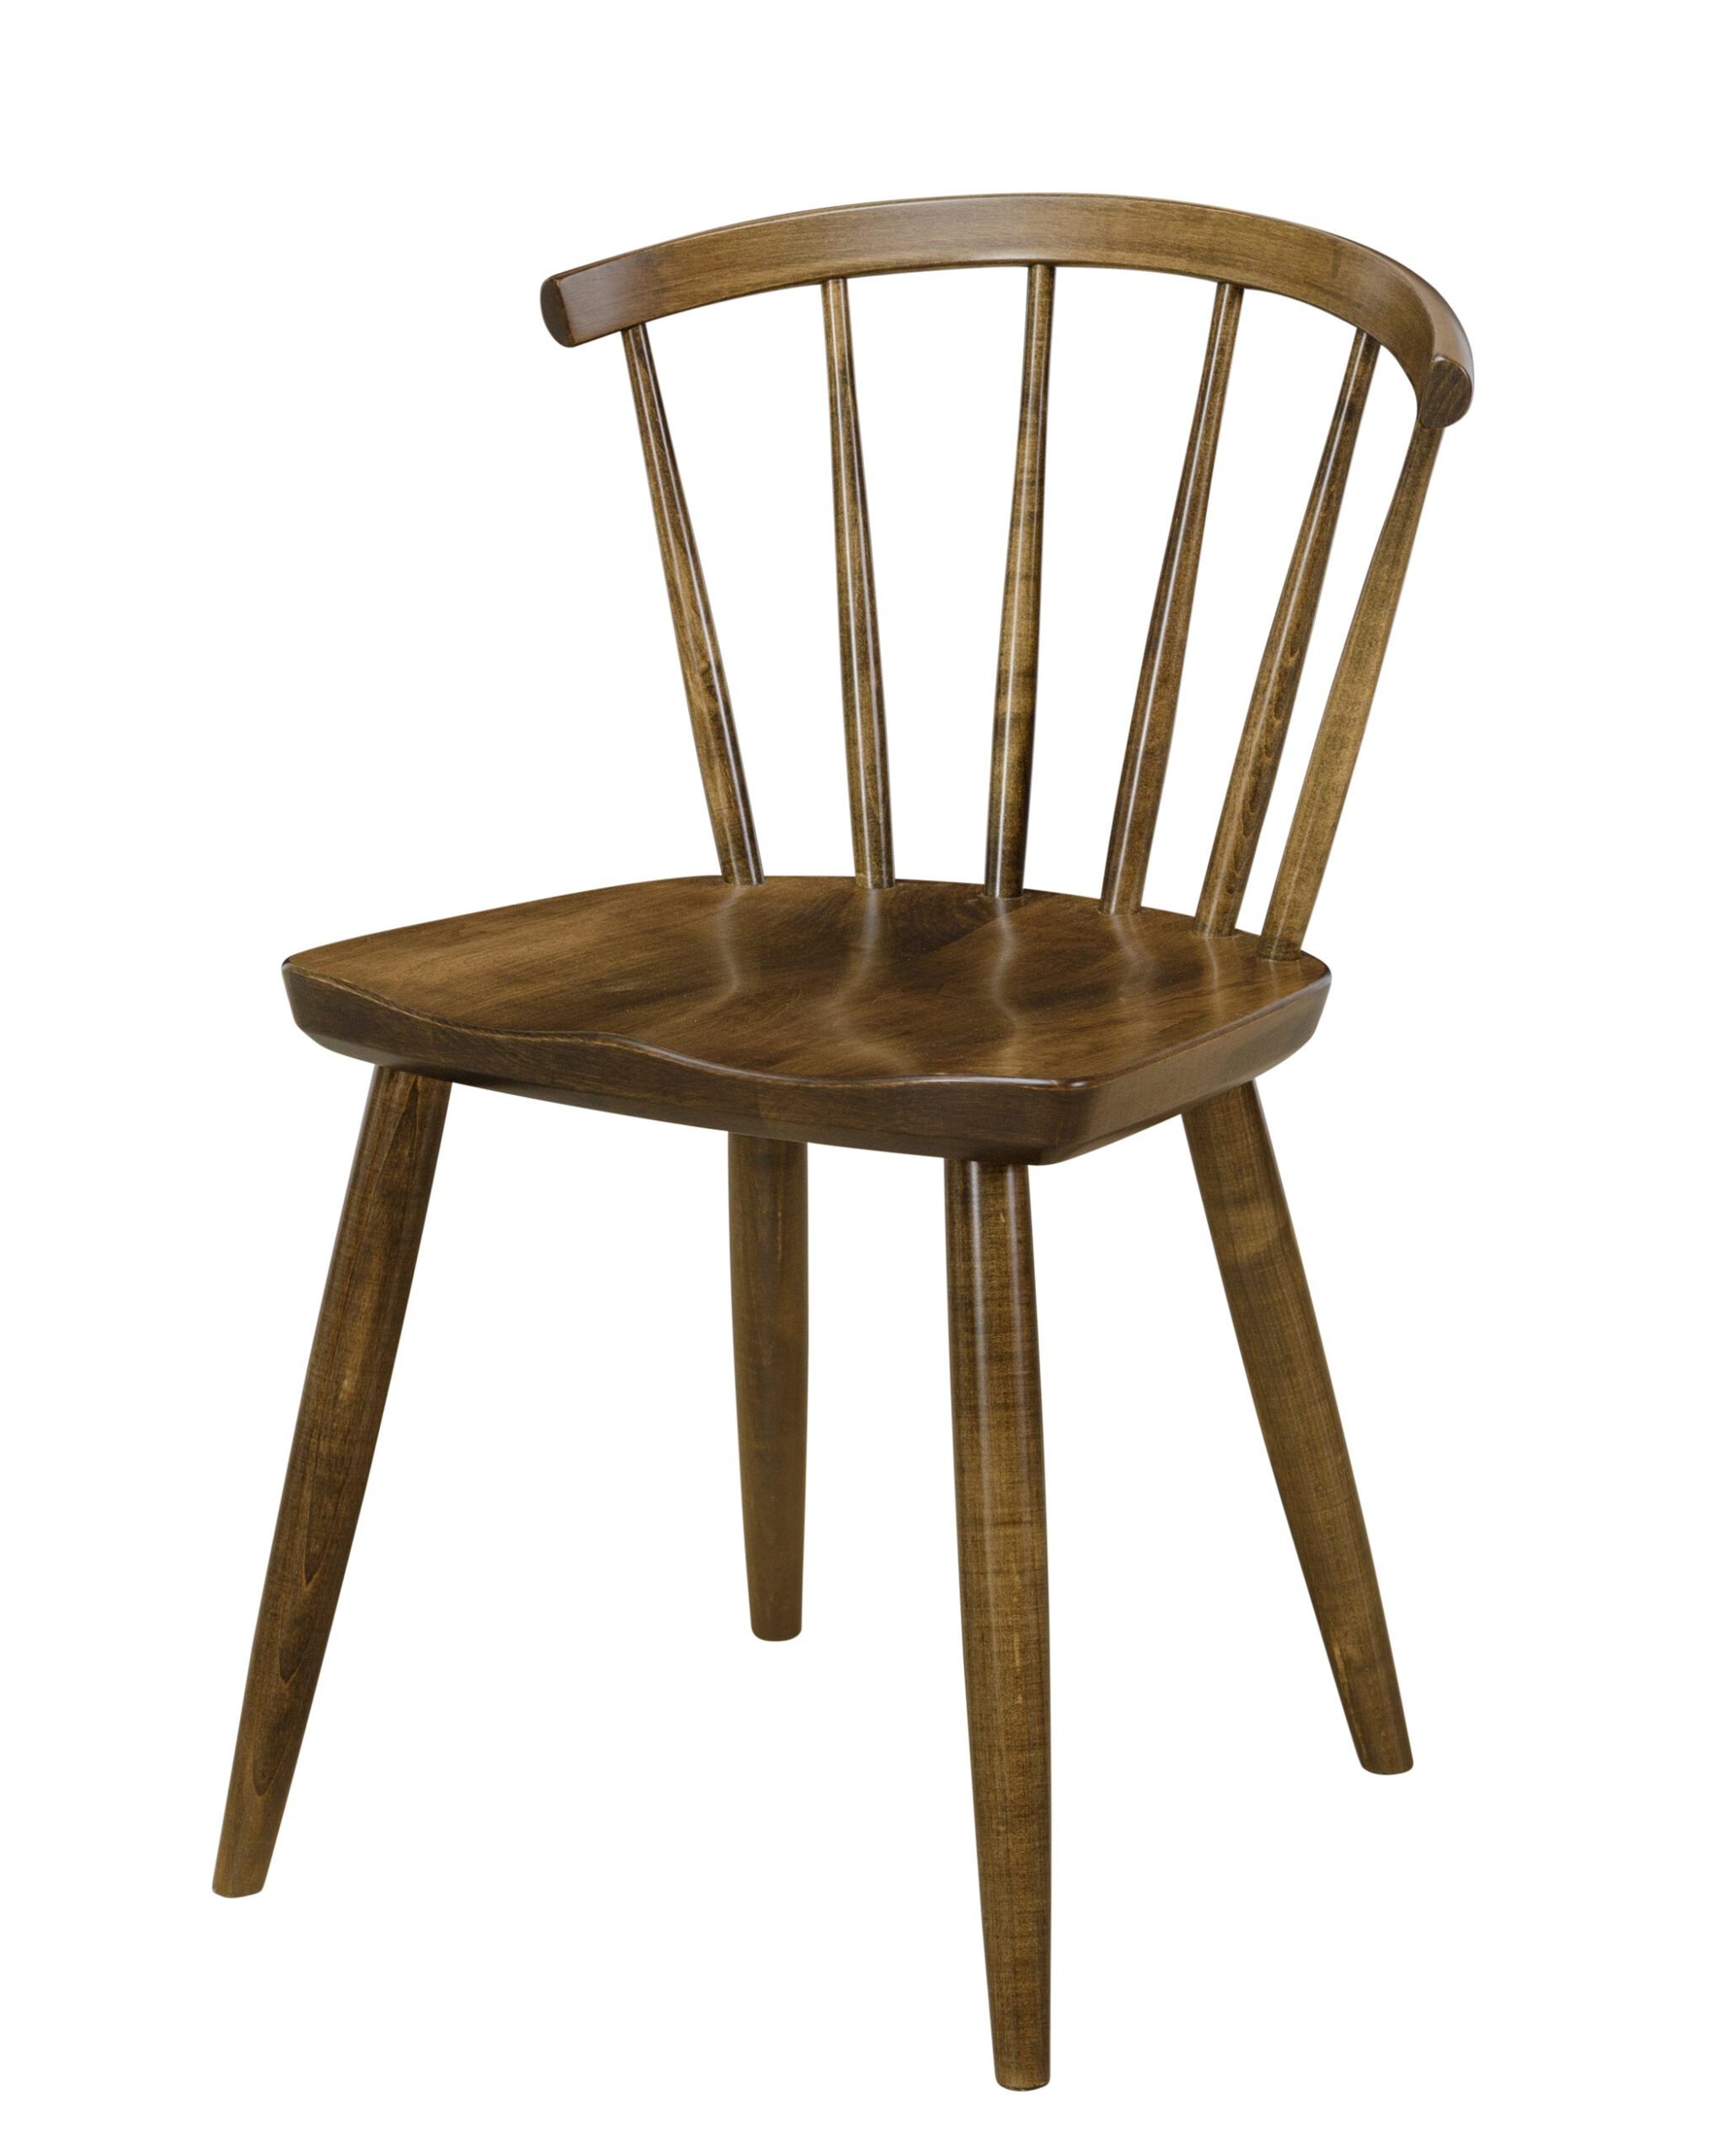 Designer Woodside Chair Image